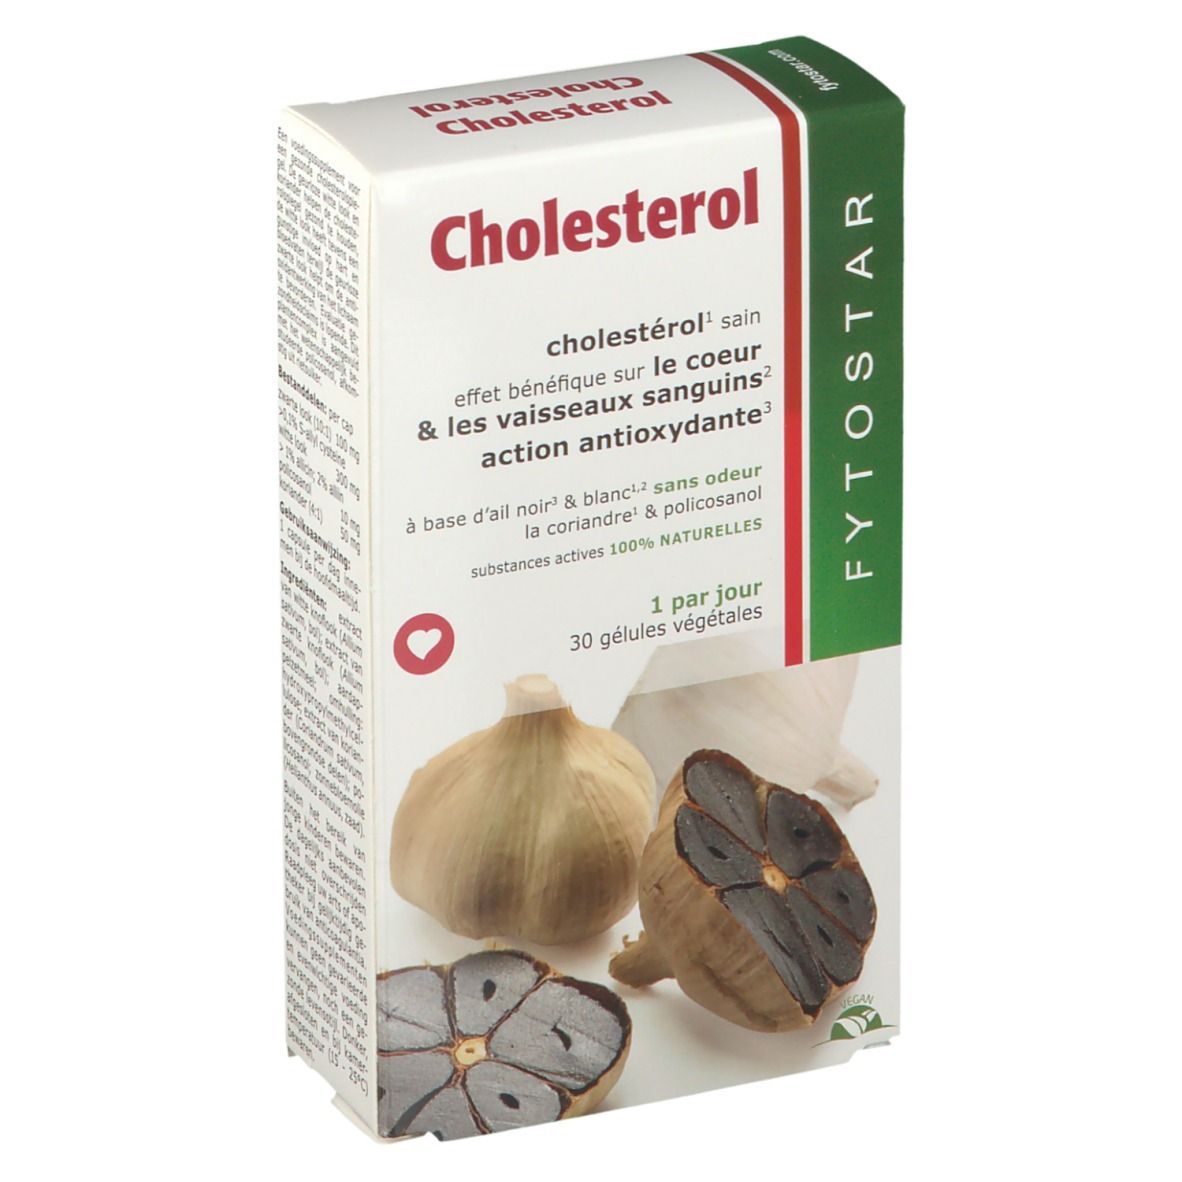 Phytostar Cholesterol